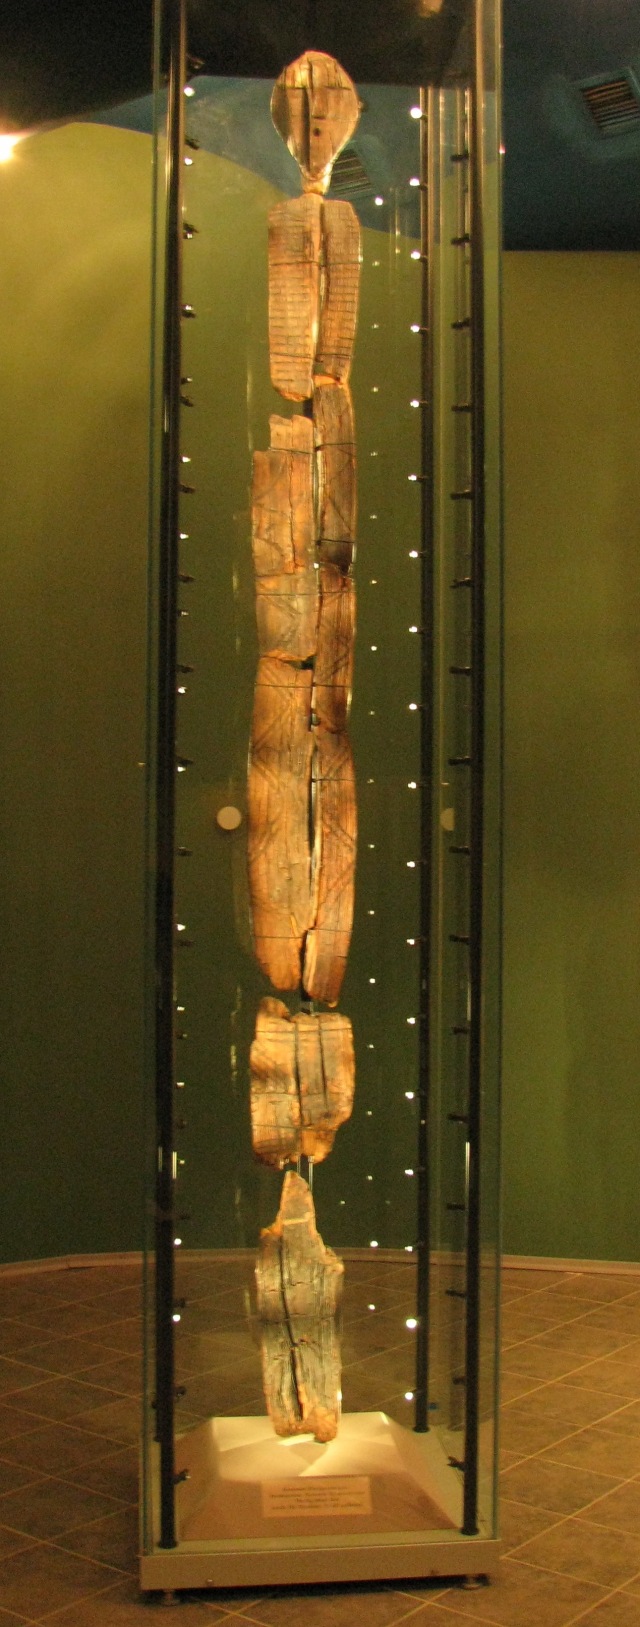 Shigir Idol, patung kayu tertua di dunia. (Foto: Tolmachev V.Y. via wikimedia commons)